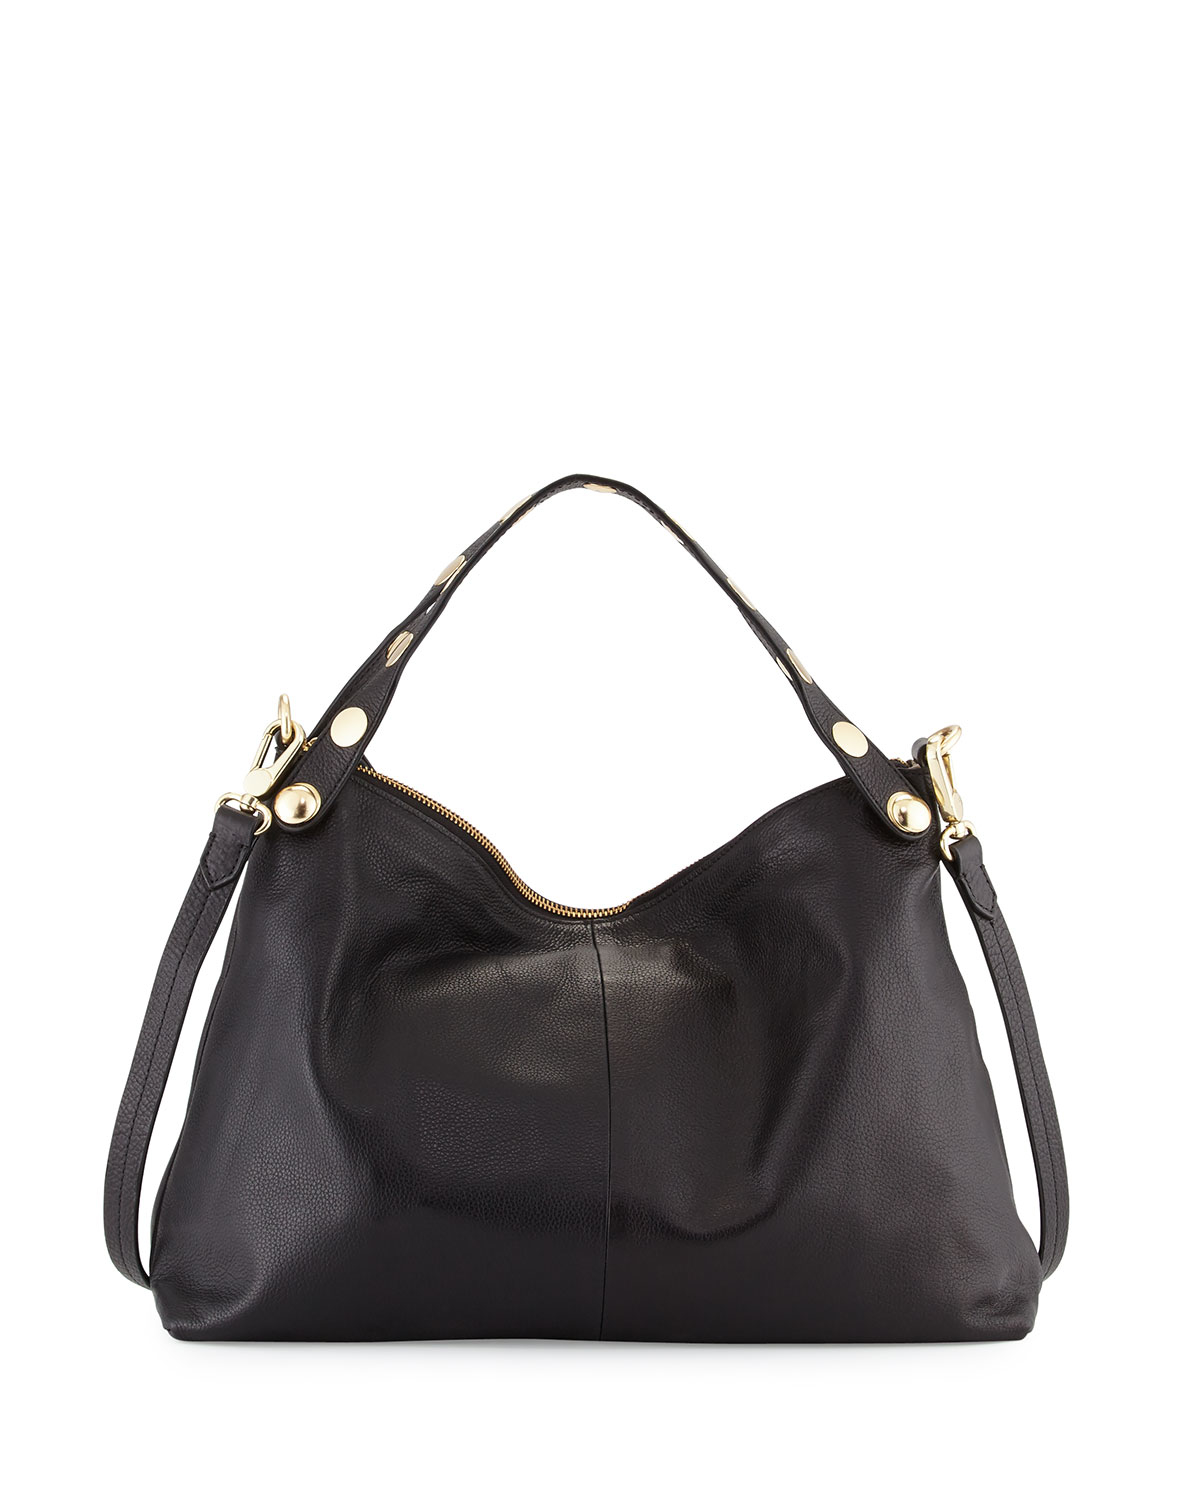 Foley Corinna Handbags. Foley + Corinna Premium Genuine Leather ...